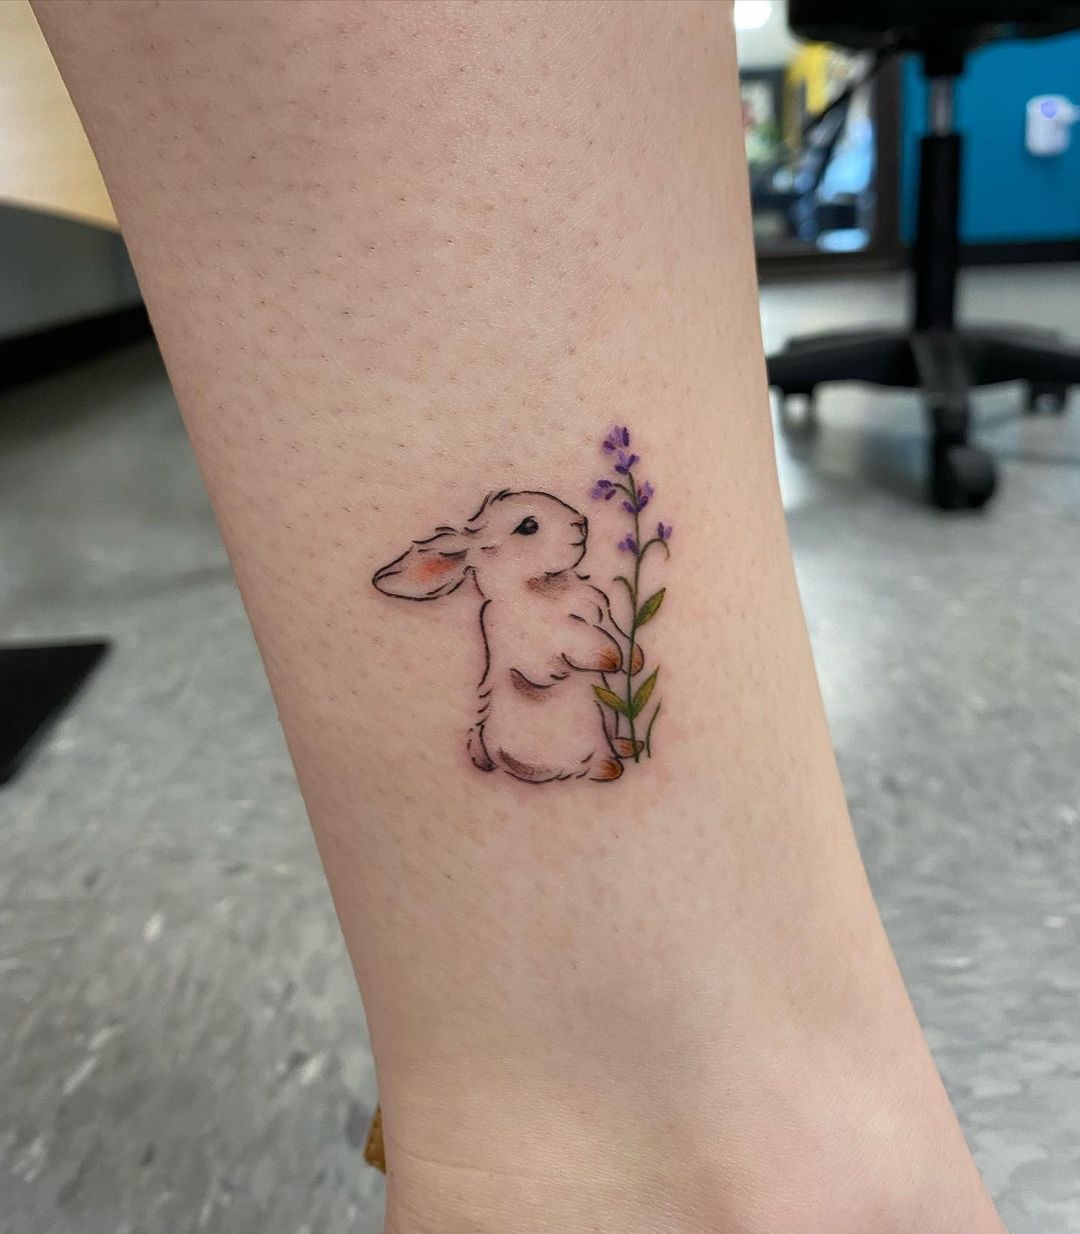 Rabbit tattoo meaning and symbolism - MyTatouage.com